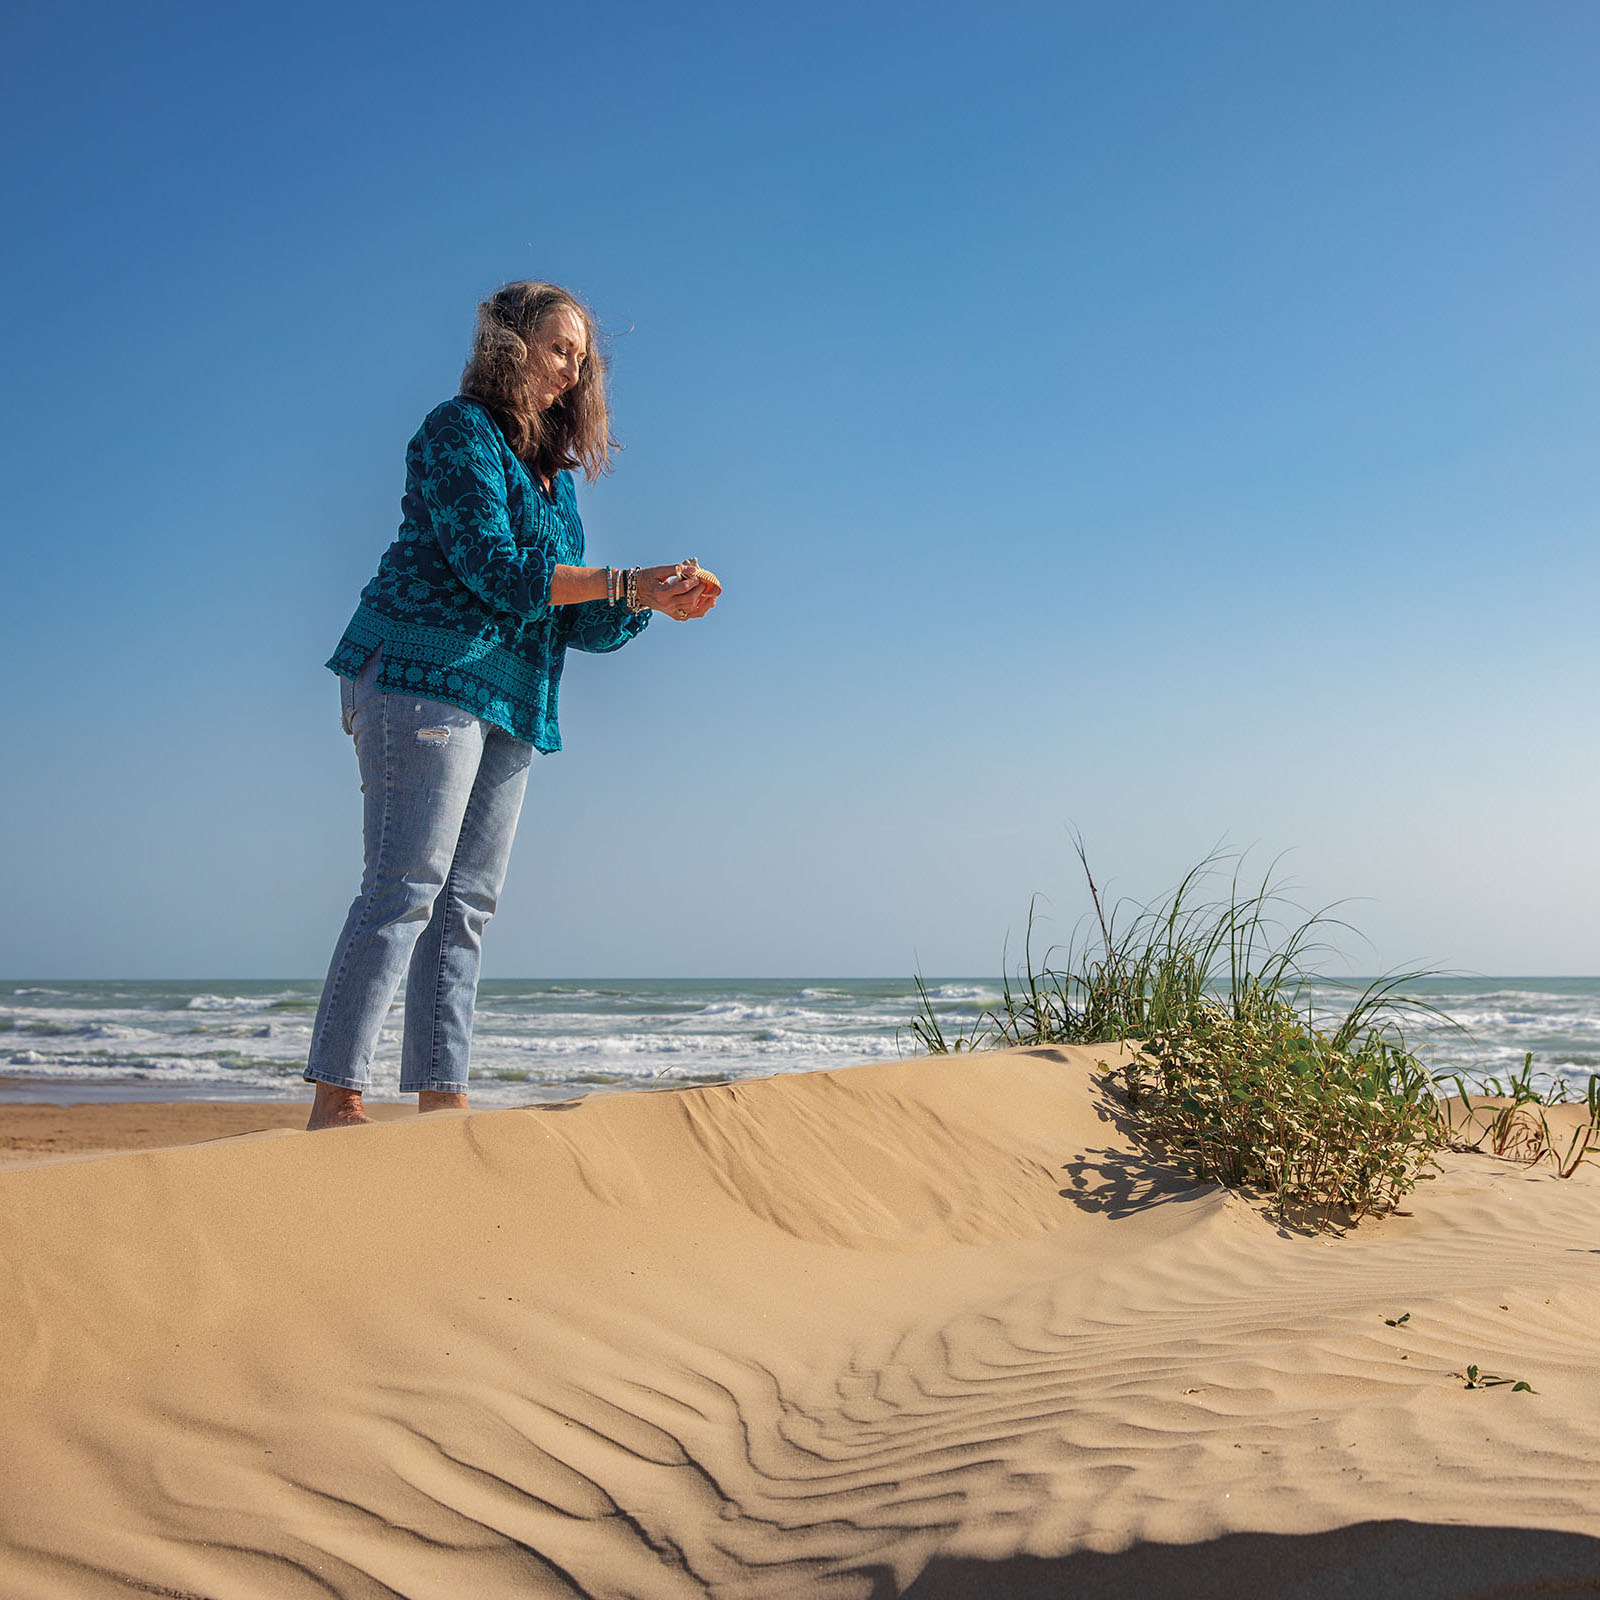 A woman wearing a blue-green flannel shirt stands on a sand dune next to scrub grass